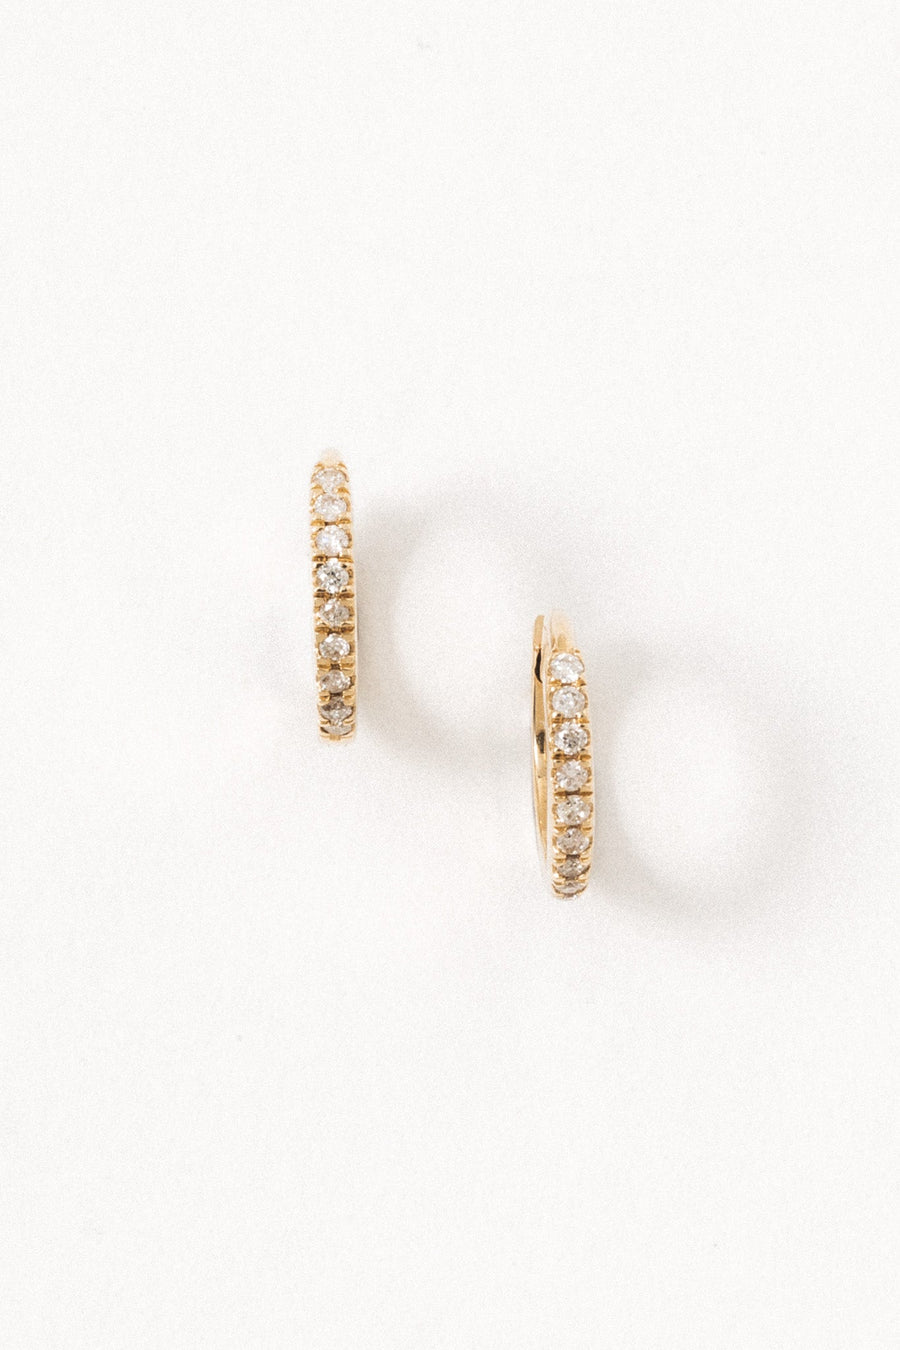 LA KAISER Jewelry Gold / Diamond 14kt Heirloom Diamond Hoop Earrings